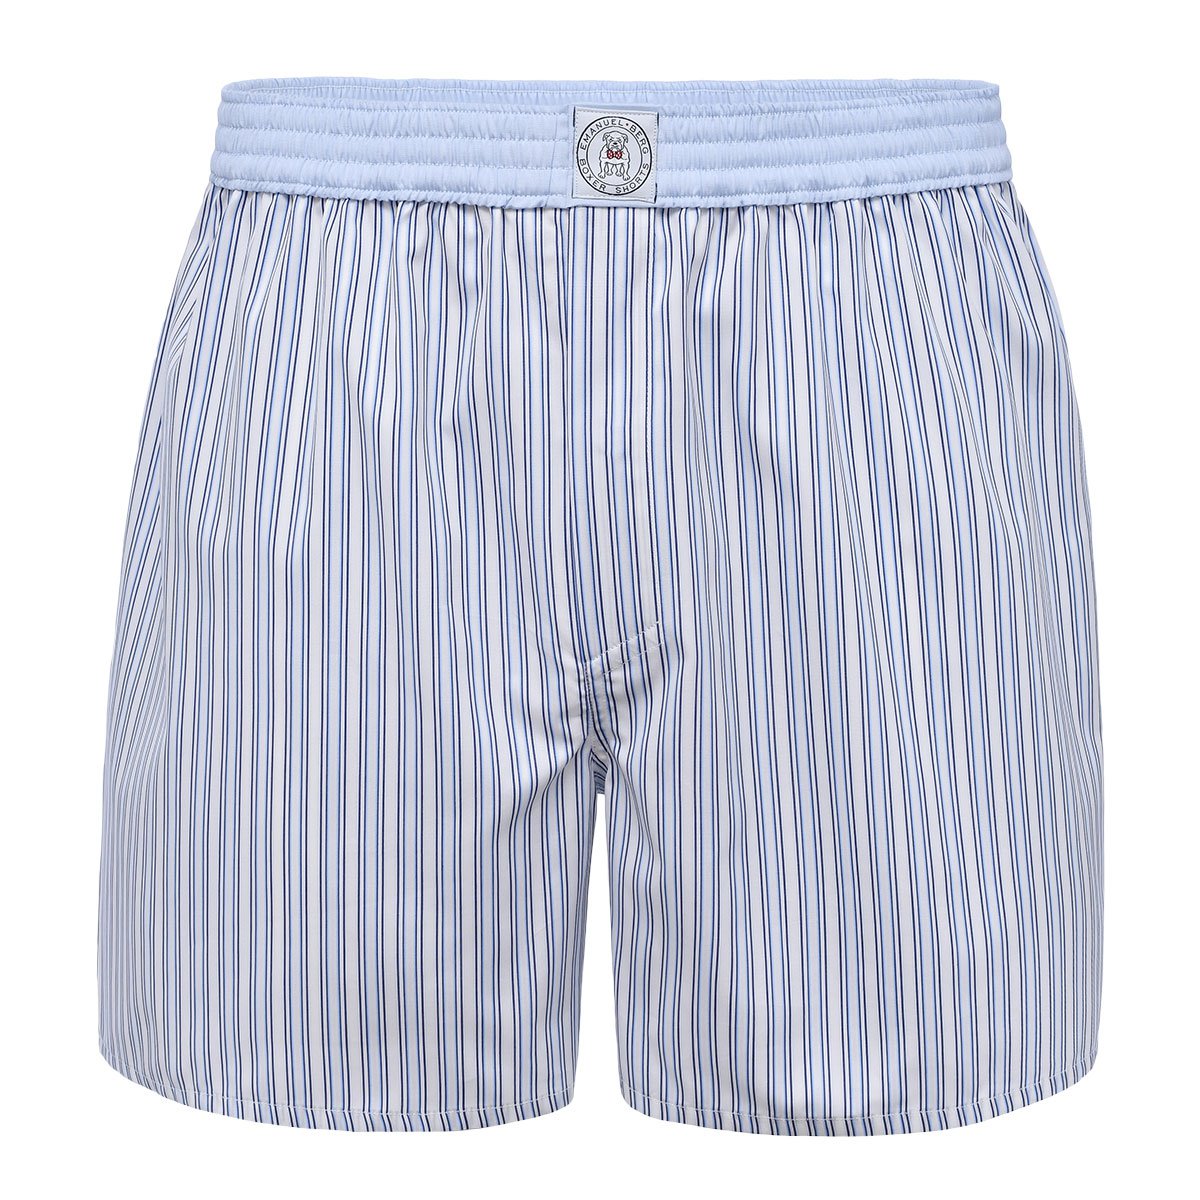 Striped stretch cotton boxer shorts, GutteridgeEU